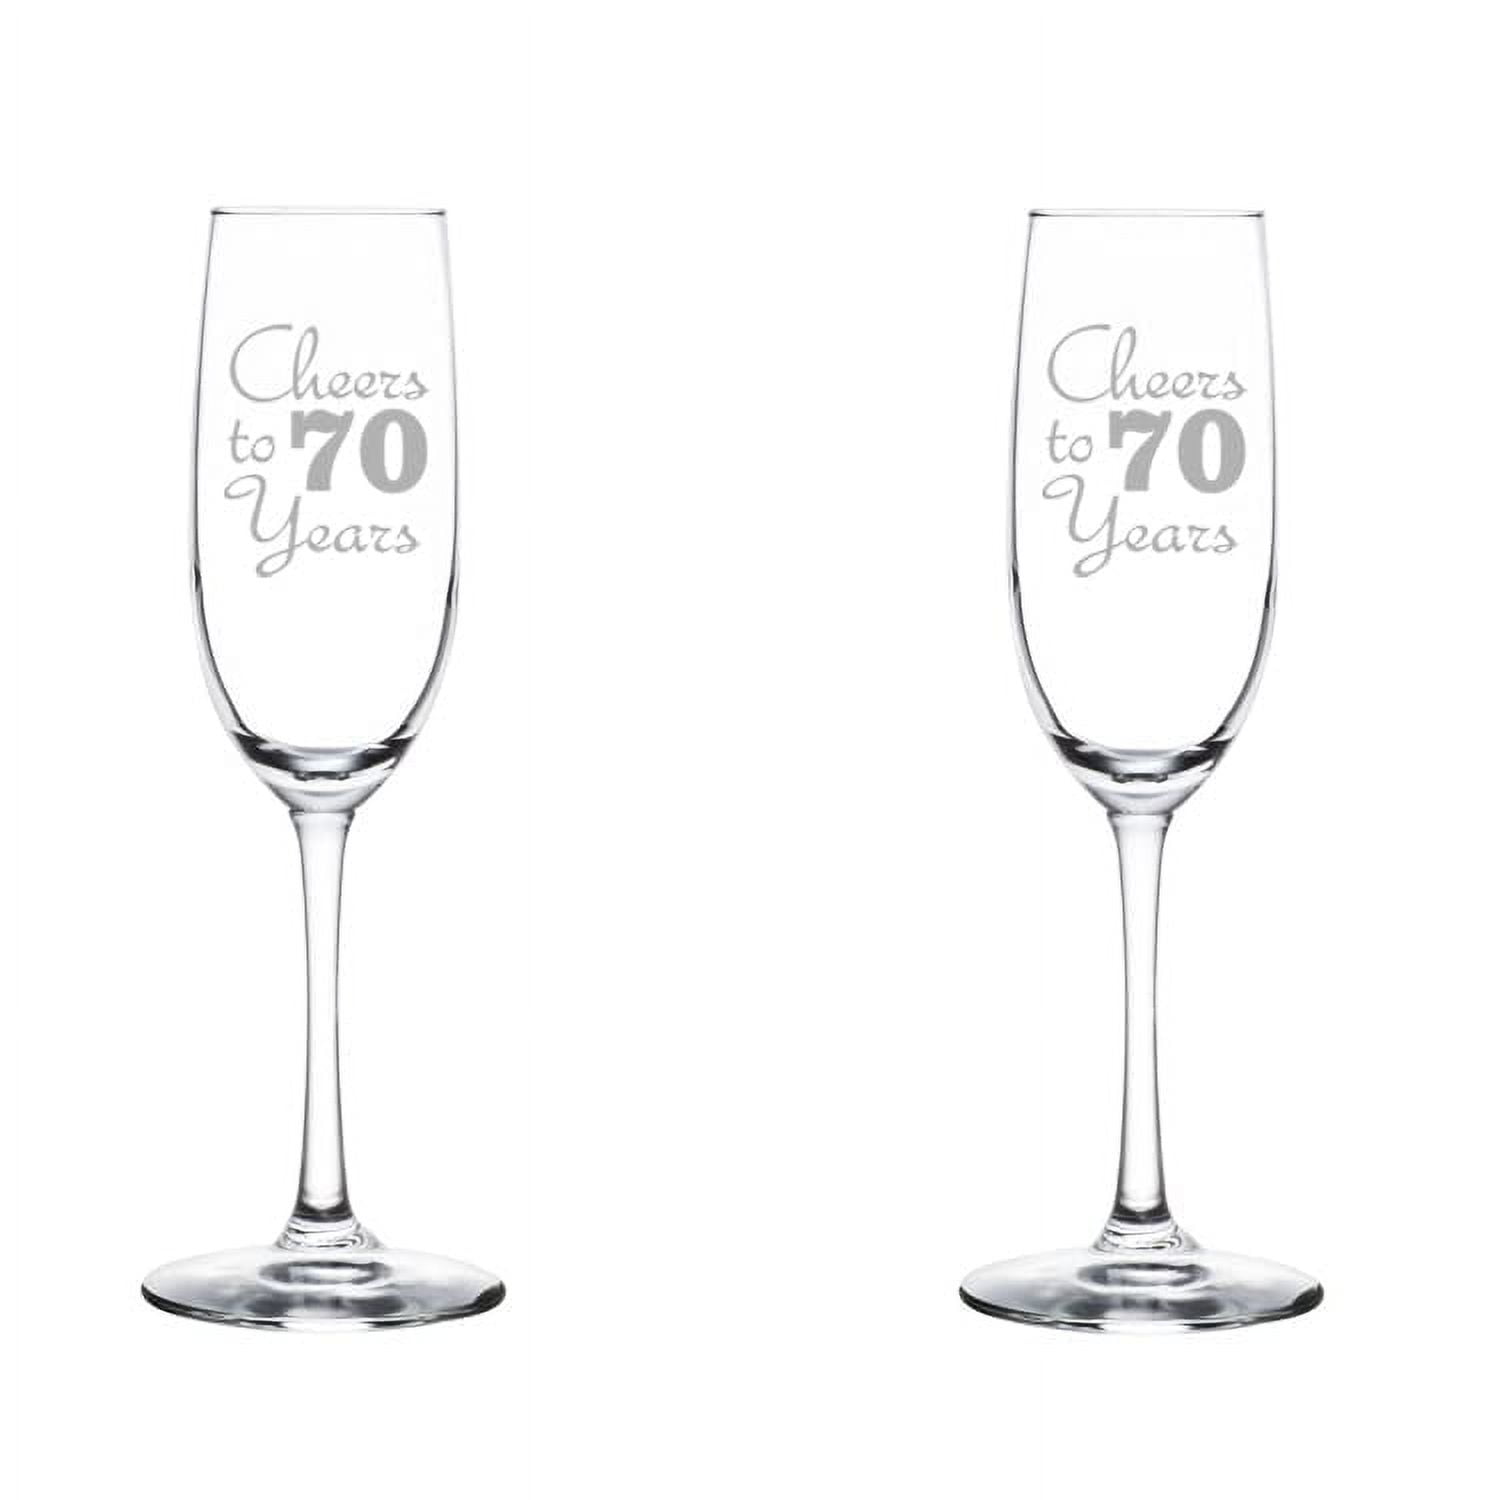 BERKWARE Premium Champagne Flutes - Crystal Tulip Champagne Glasses - 7.7  oz each (Set of 2)